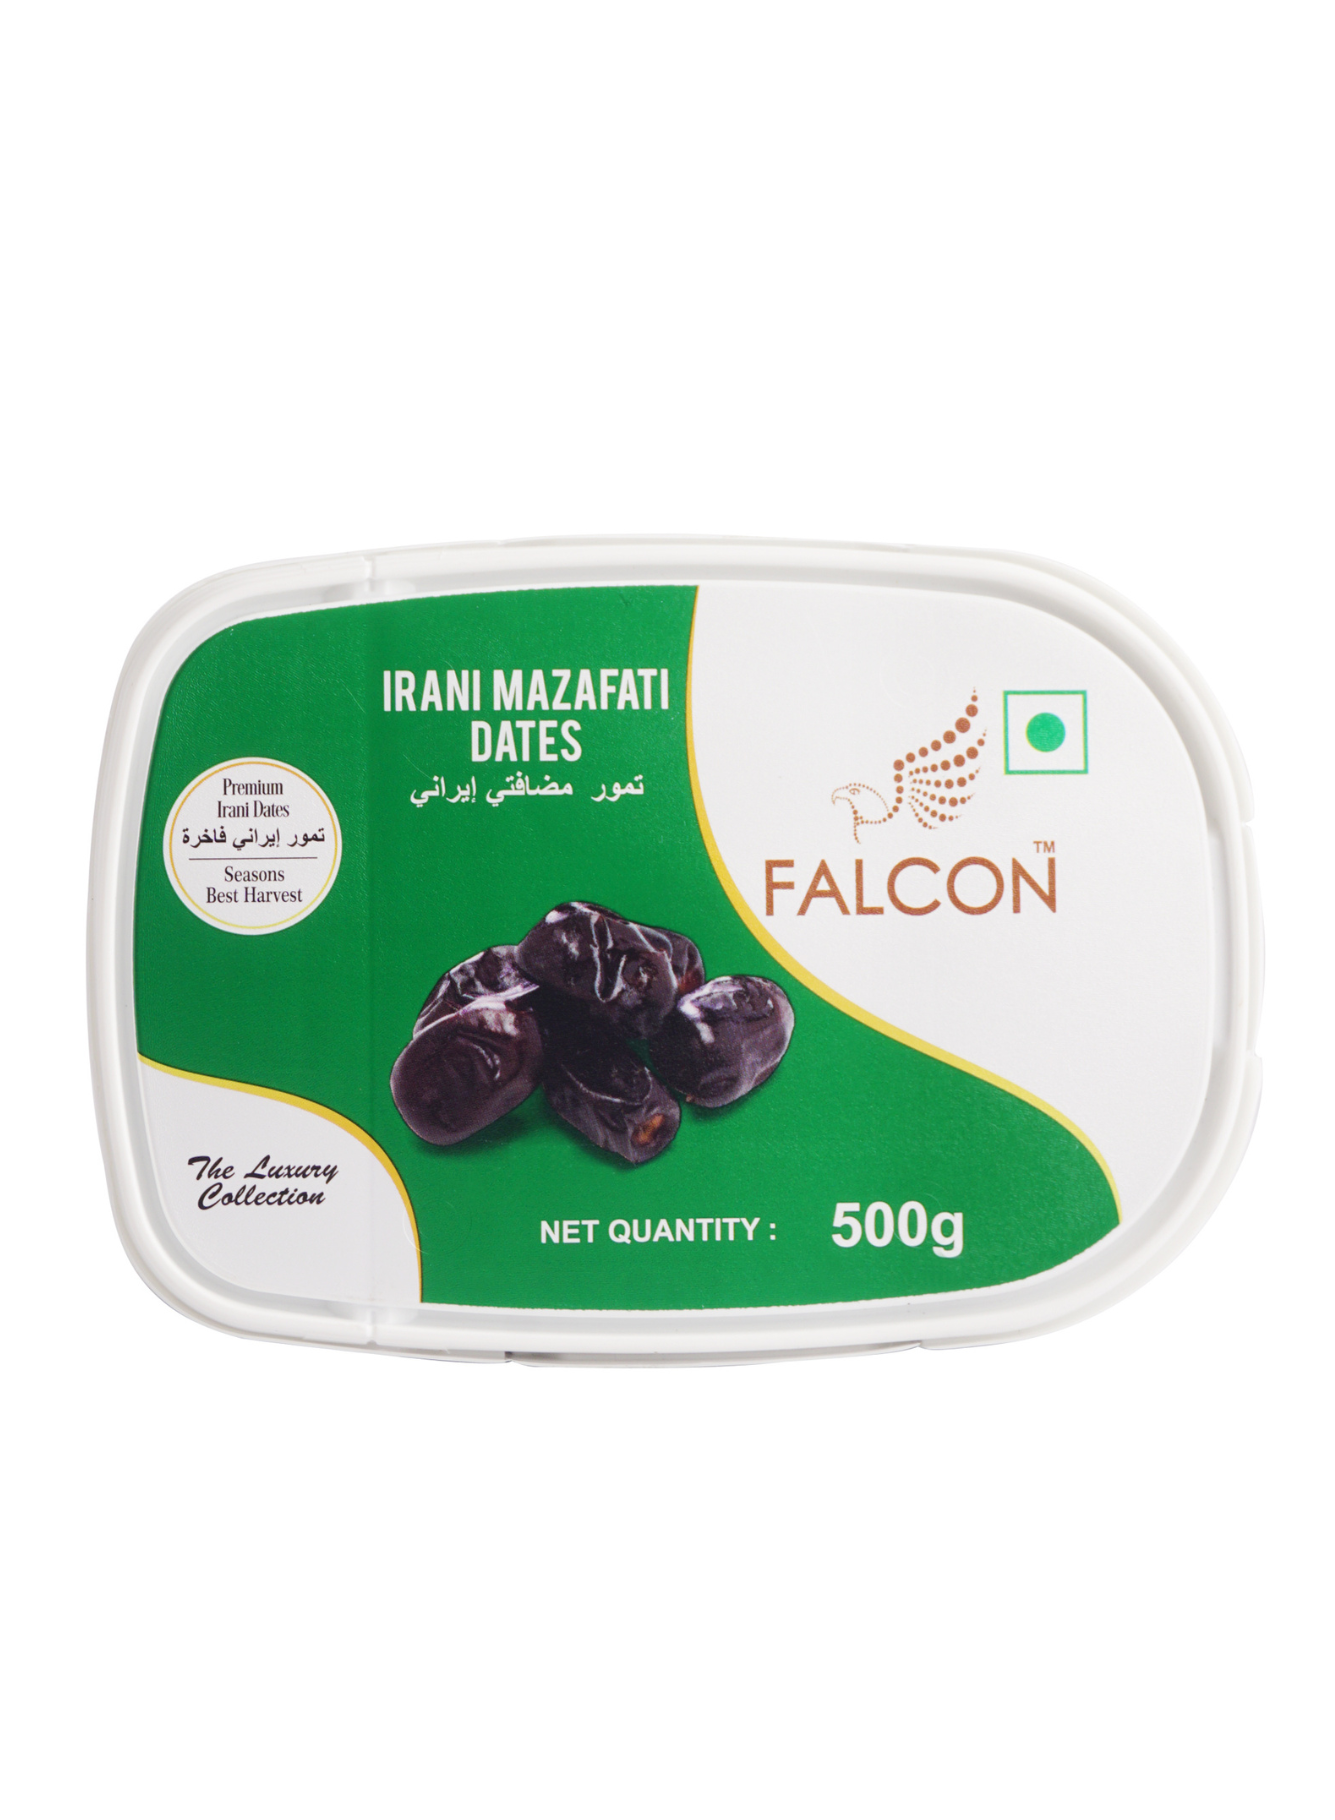 Falcon Irani Mazafati Dates Box- 500g